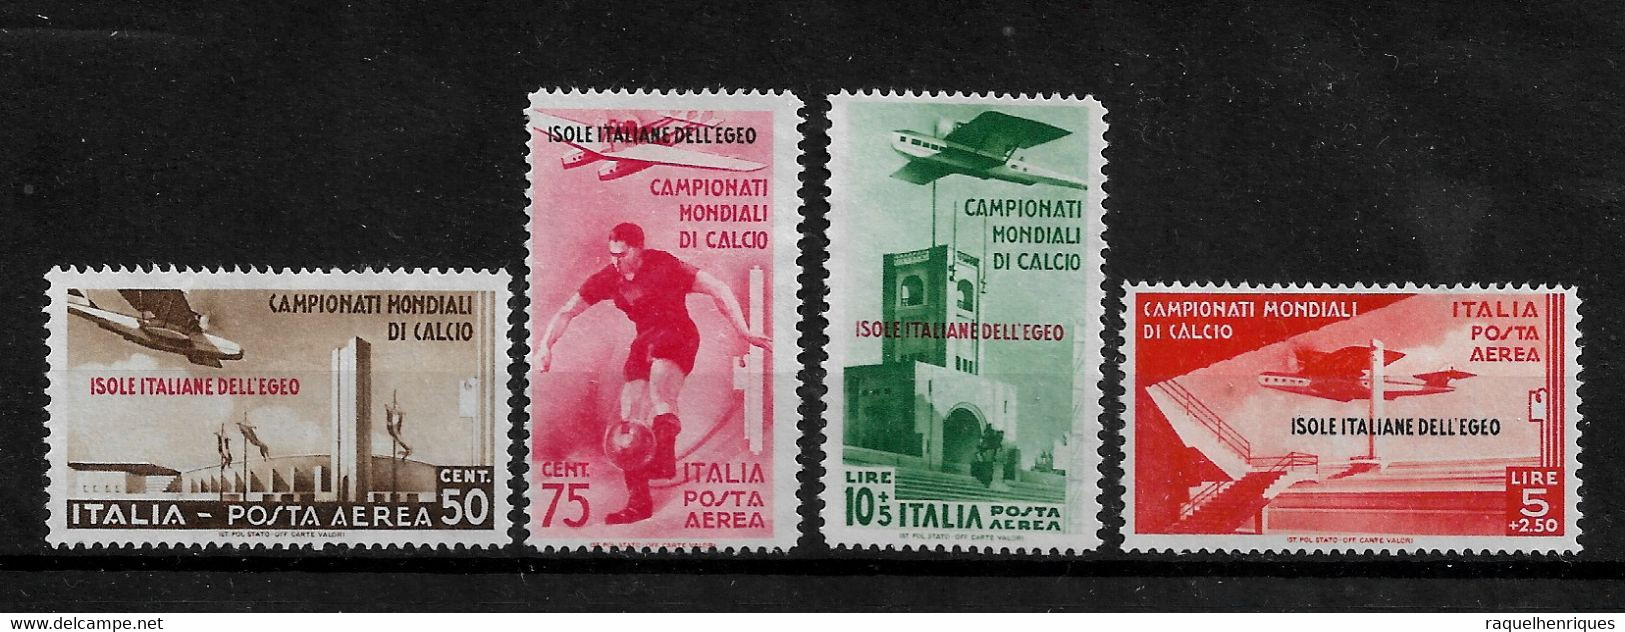 ITALY STAMP - AEGEAN ISLANDS - 1934 Airmail - Football World Cup SET M NG (BA5#108) - Egeo (Adm. Autónoma)